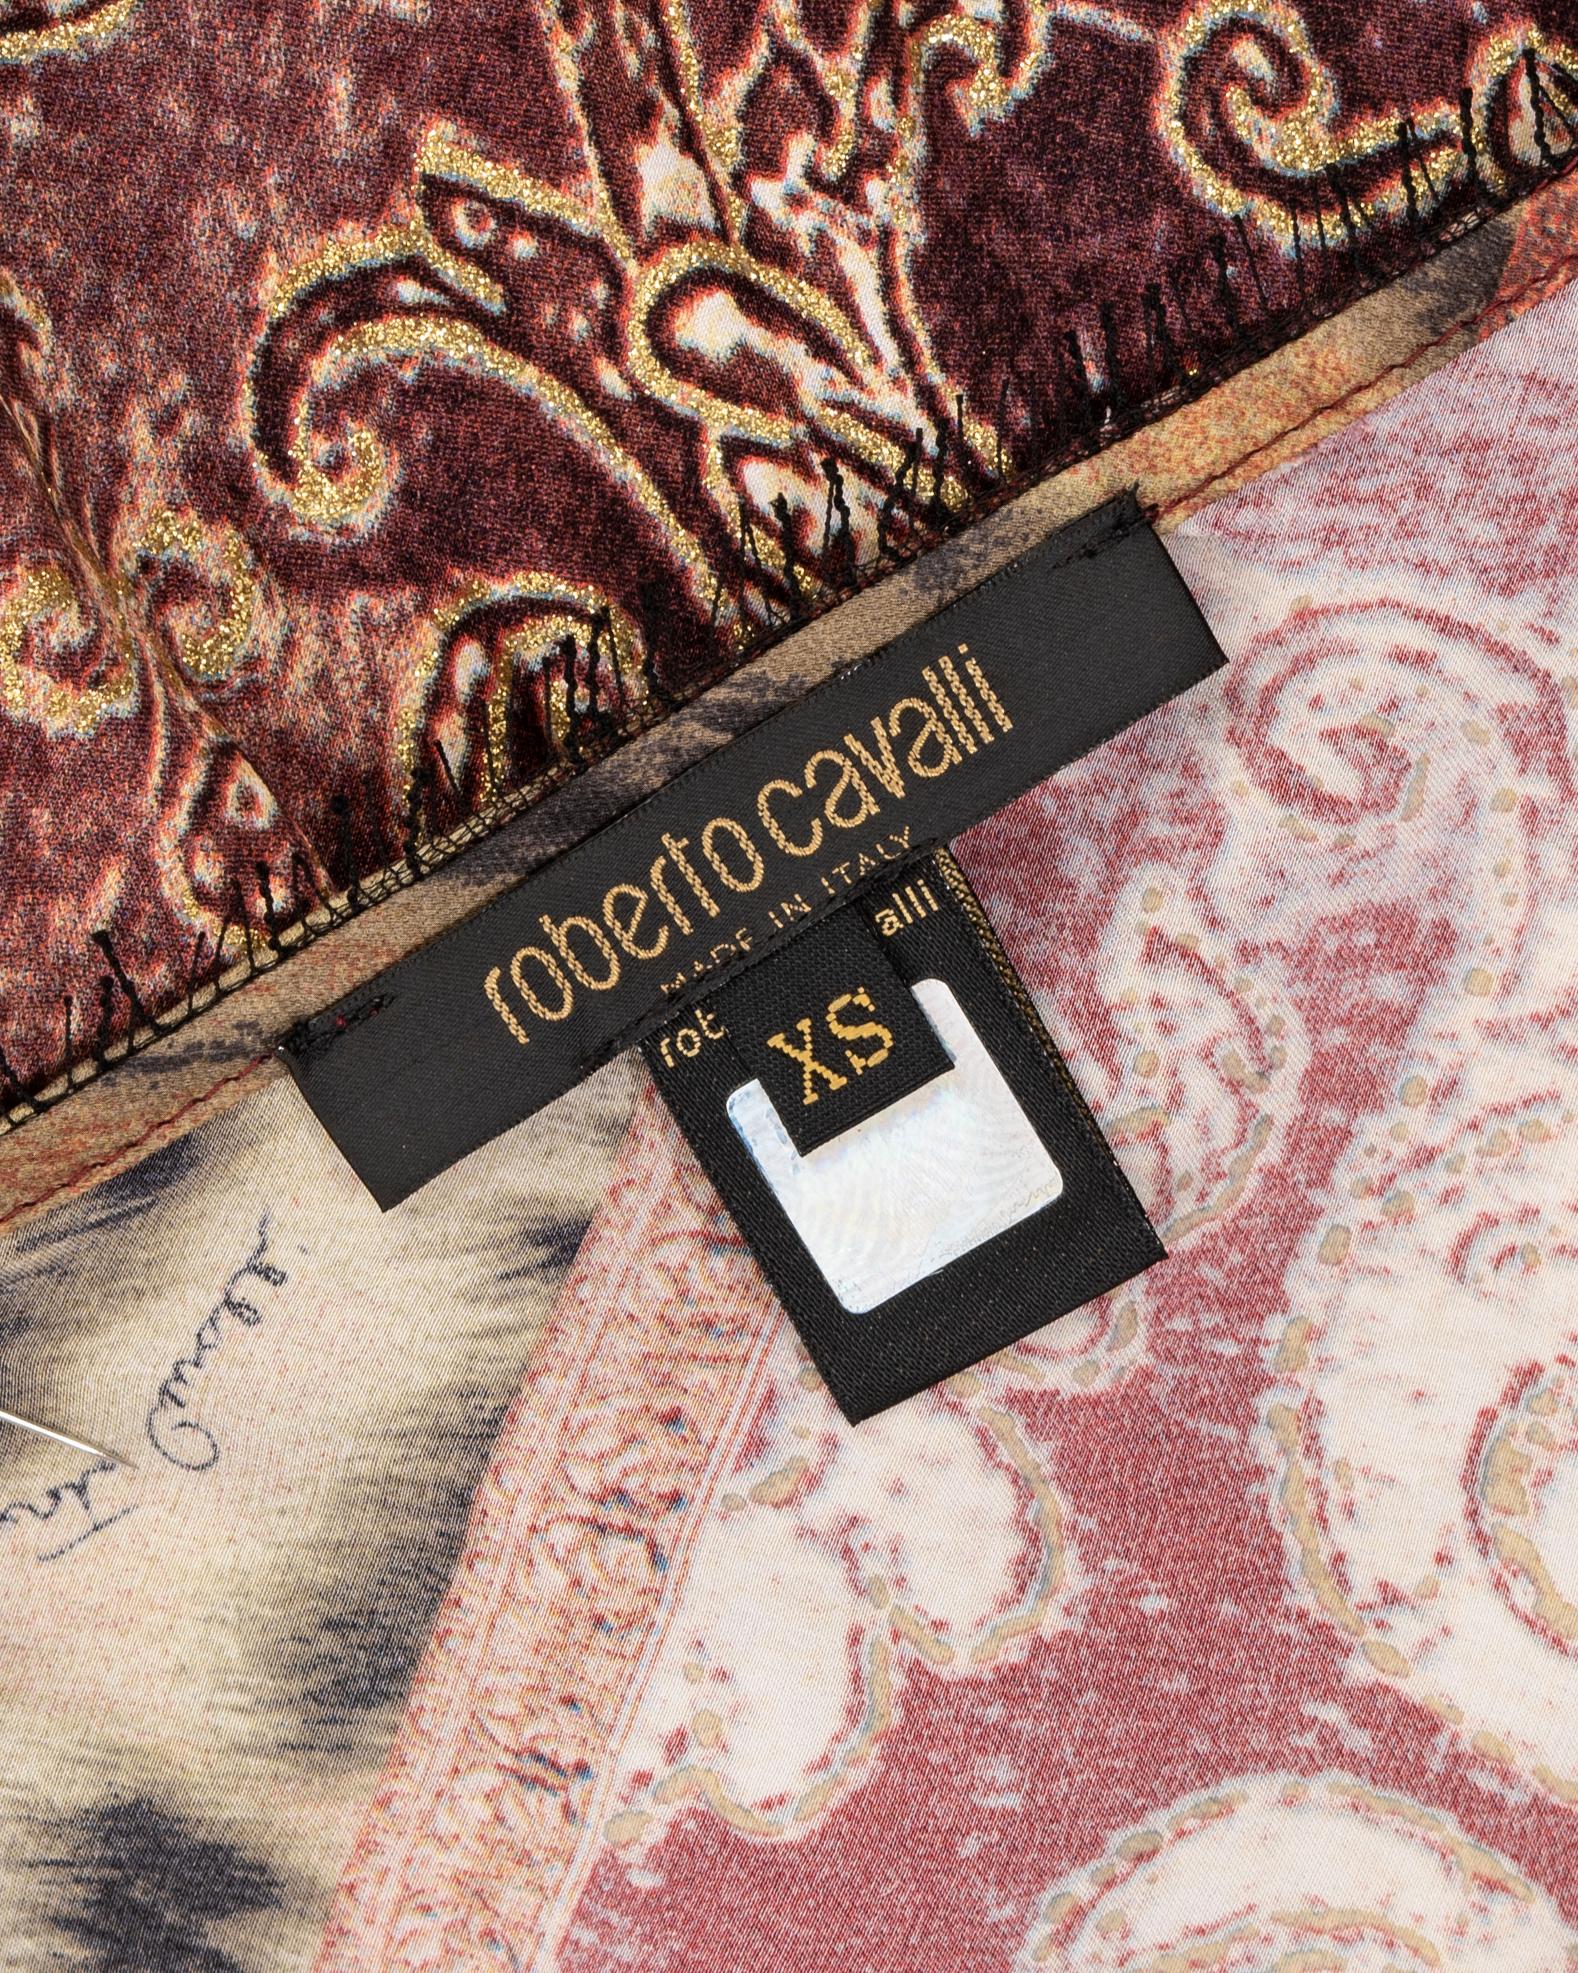 Roberto Cavalli brocade printed silk evening dress with ruffled skirt, fw 2004 For Sale 7